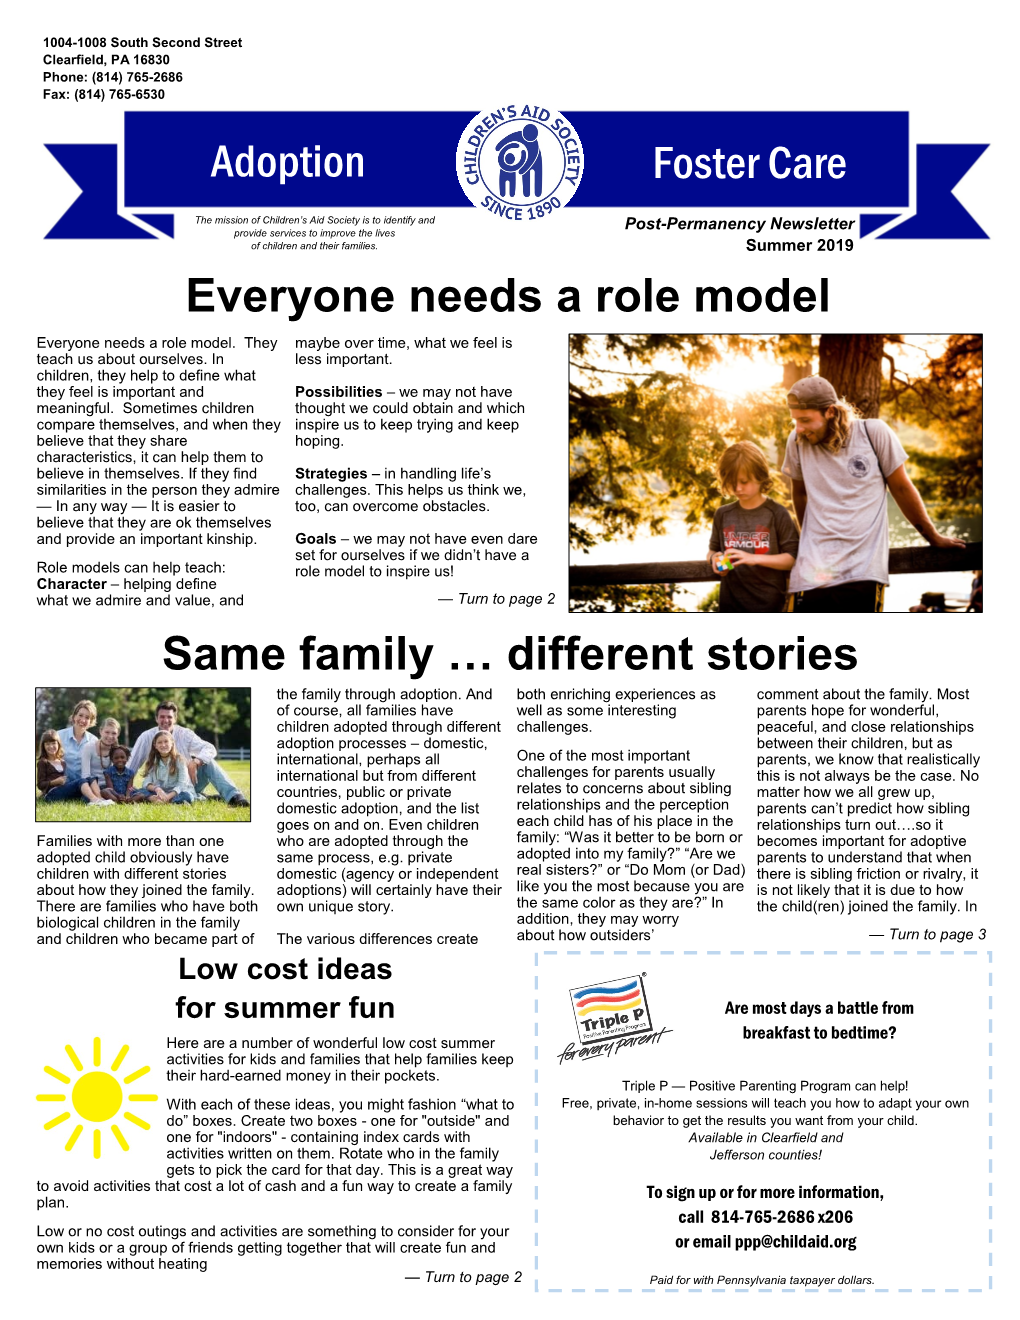 Adoption Foster Care Everyone Needs a Role Model Same Family